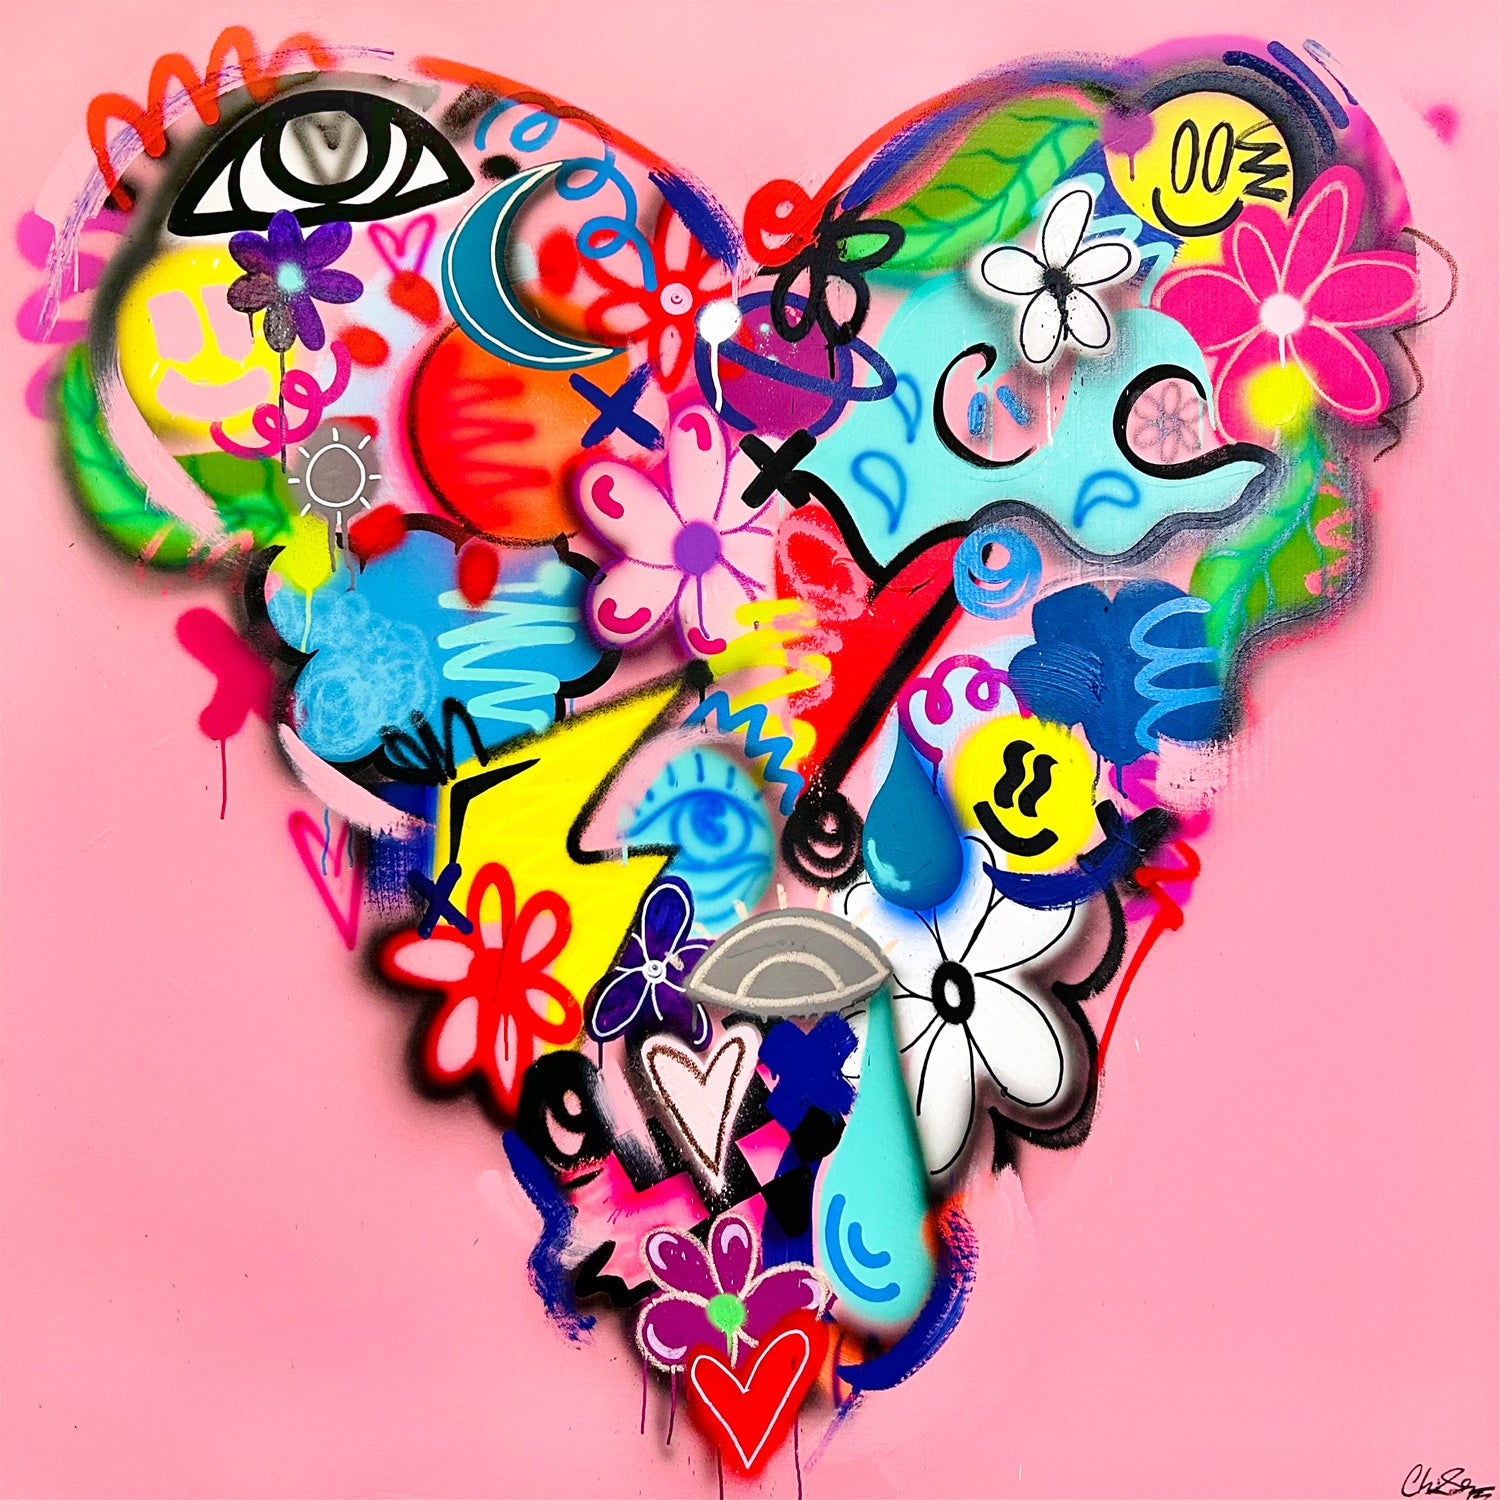 Chris Solcz - Symbolic Heart, 48" x 48"